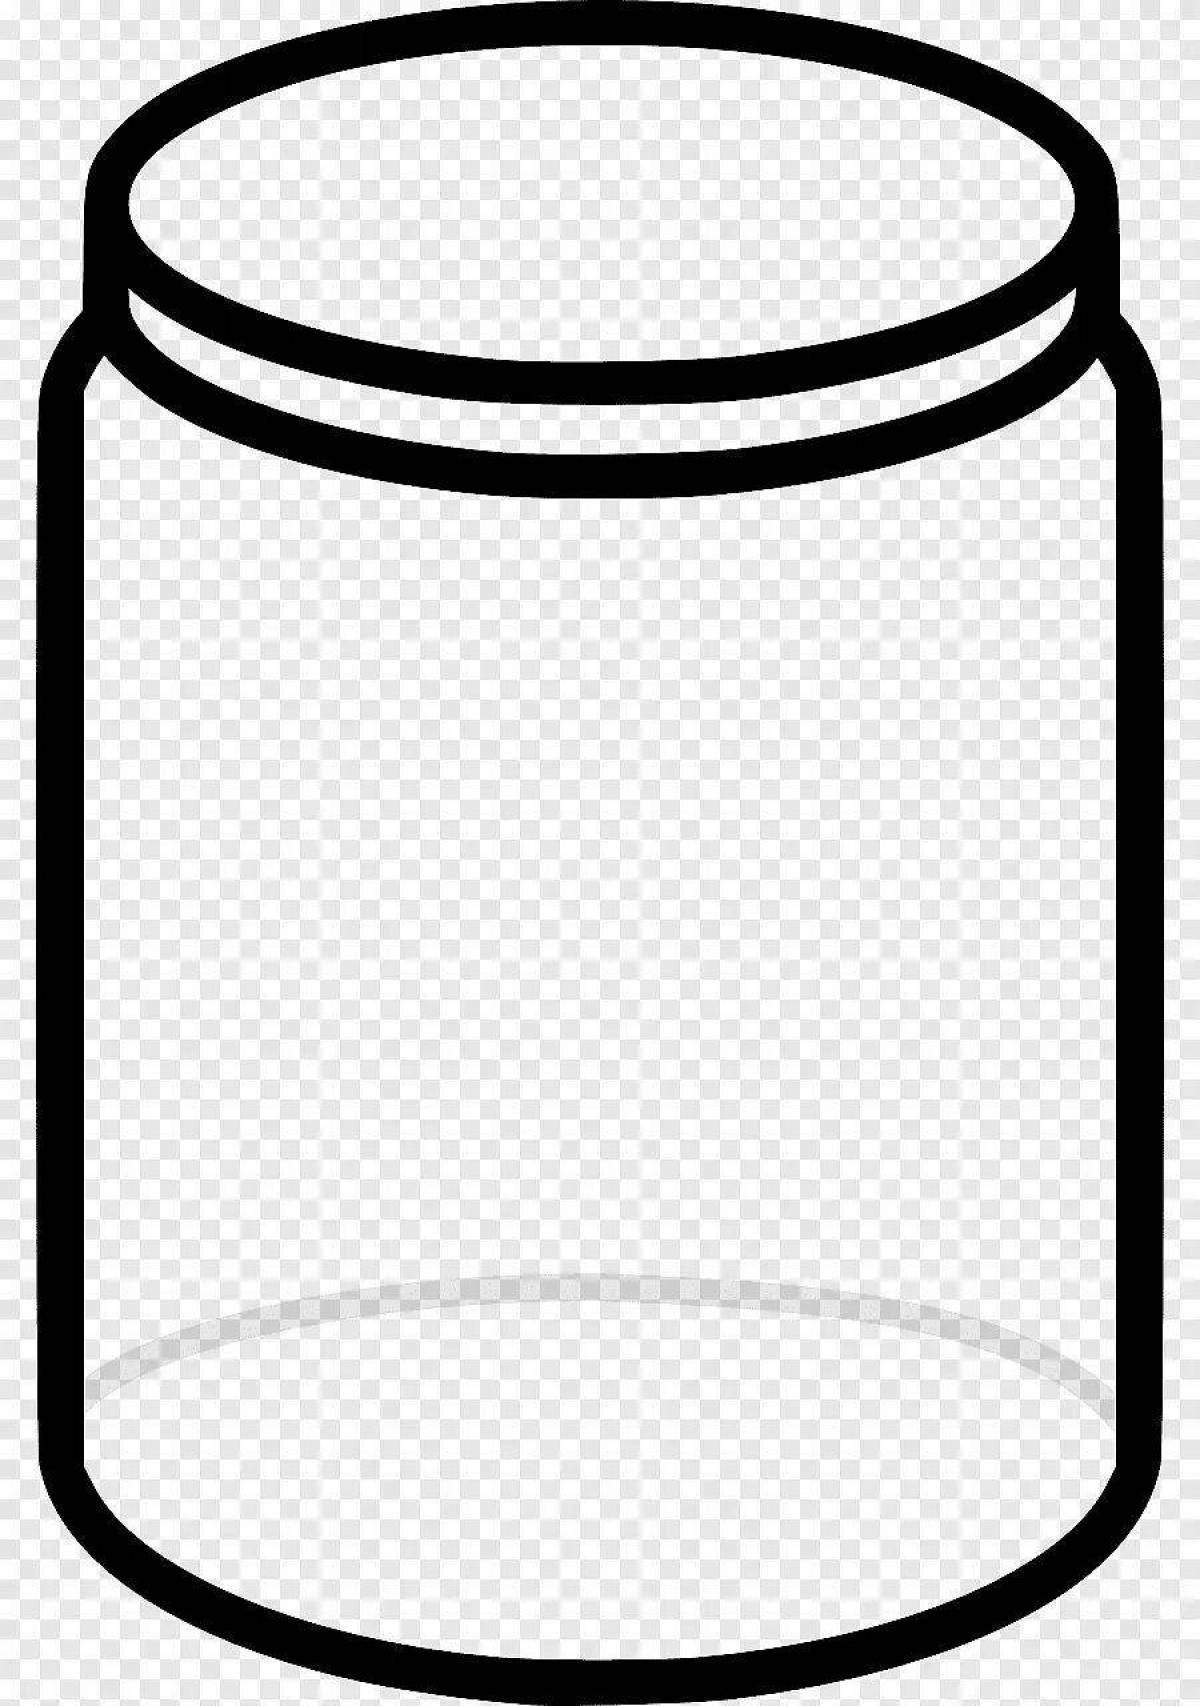 Colorful empty jar